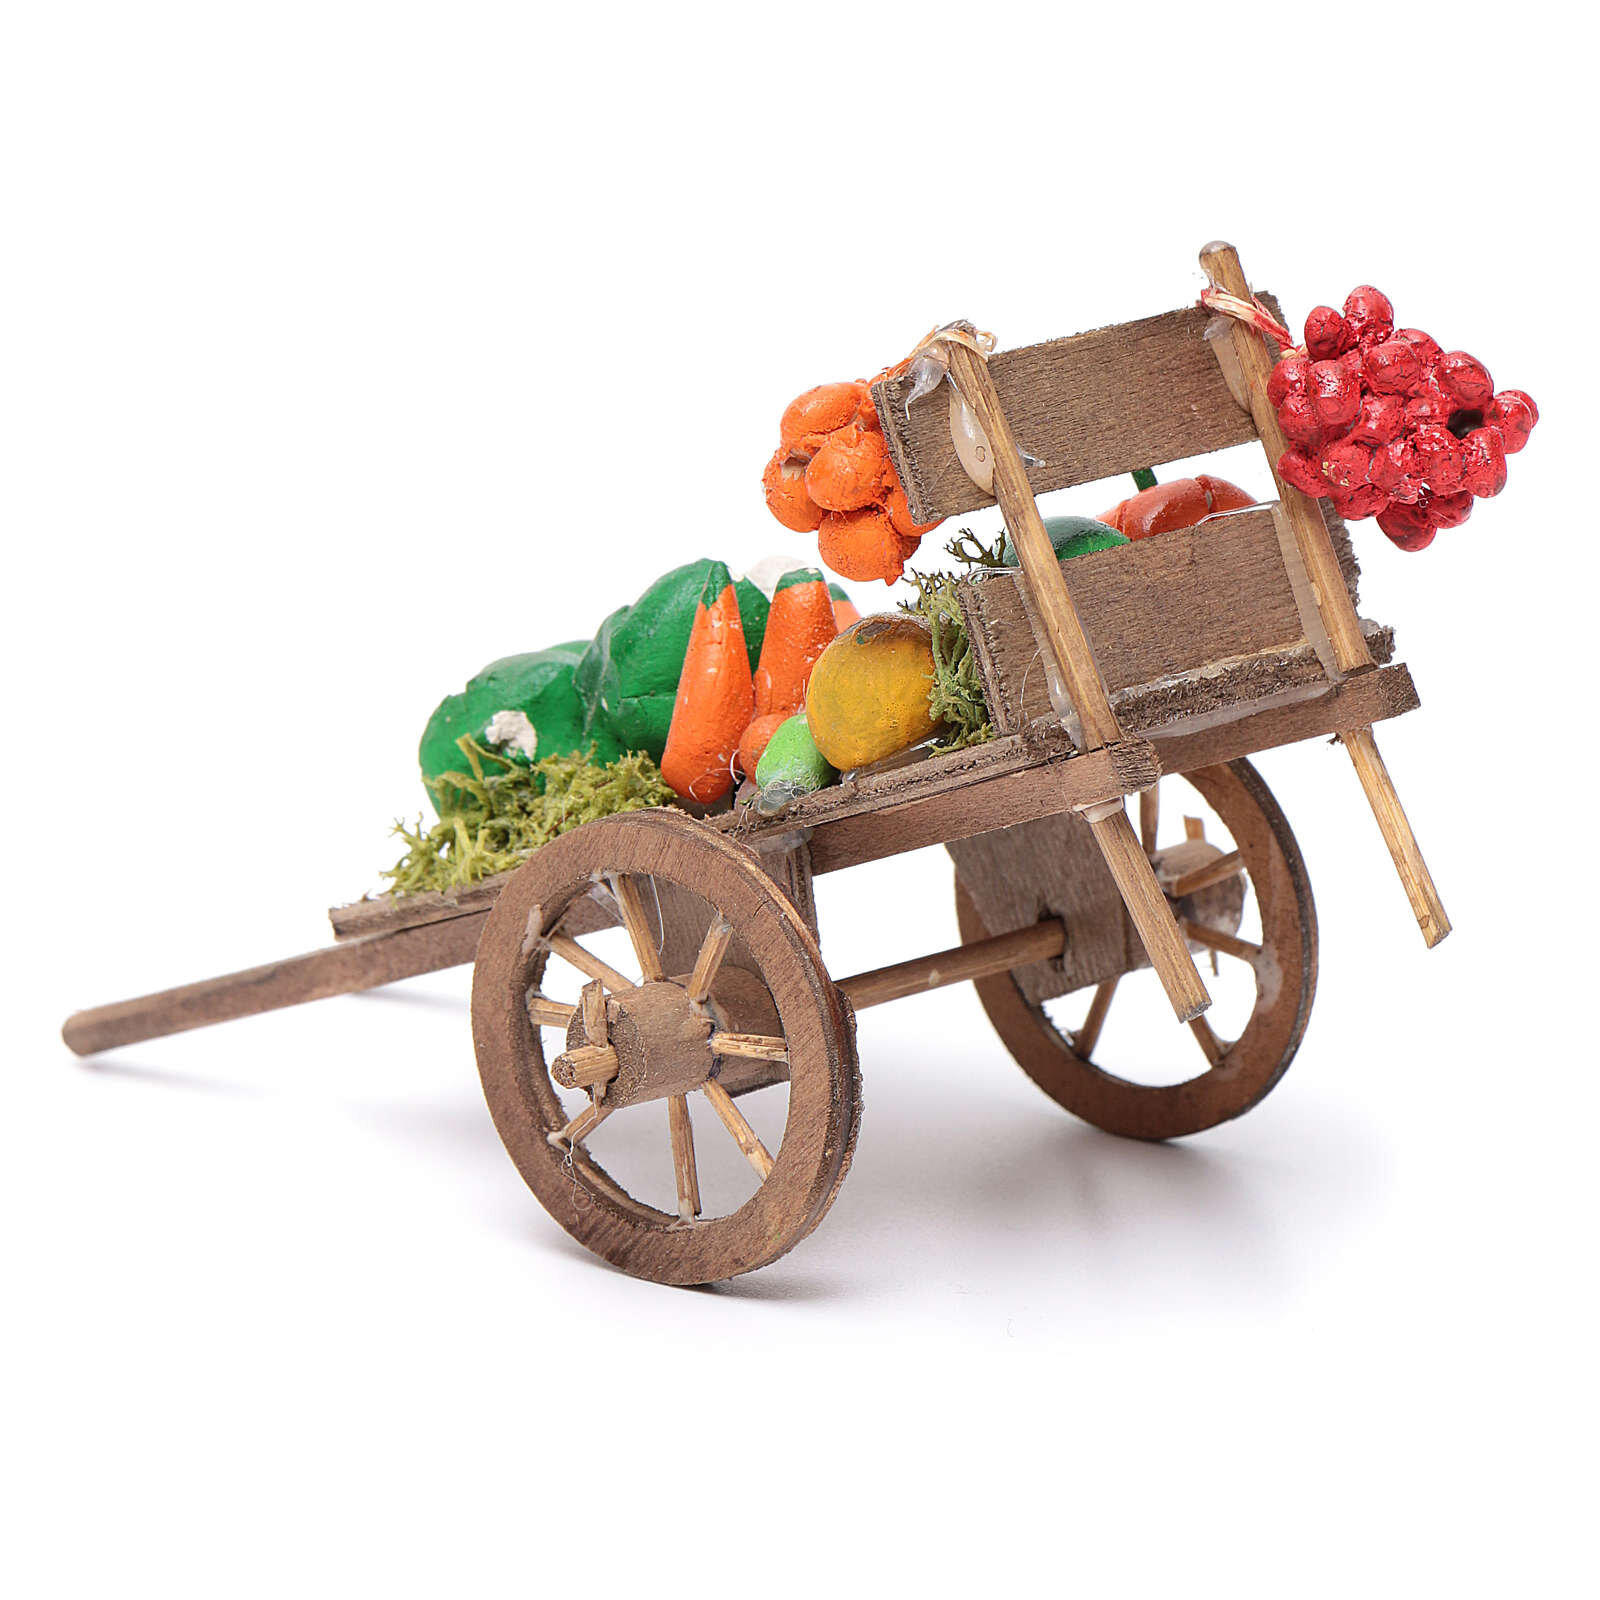 neapolitan-nativity-accessory-fruit-and-vegetable-cart-8x12x7cm.jpg